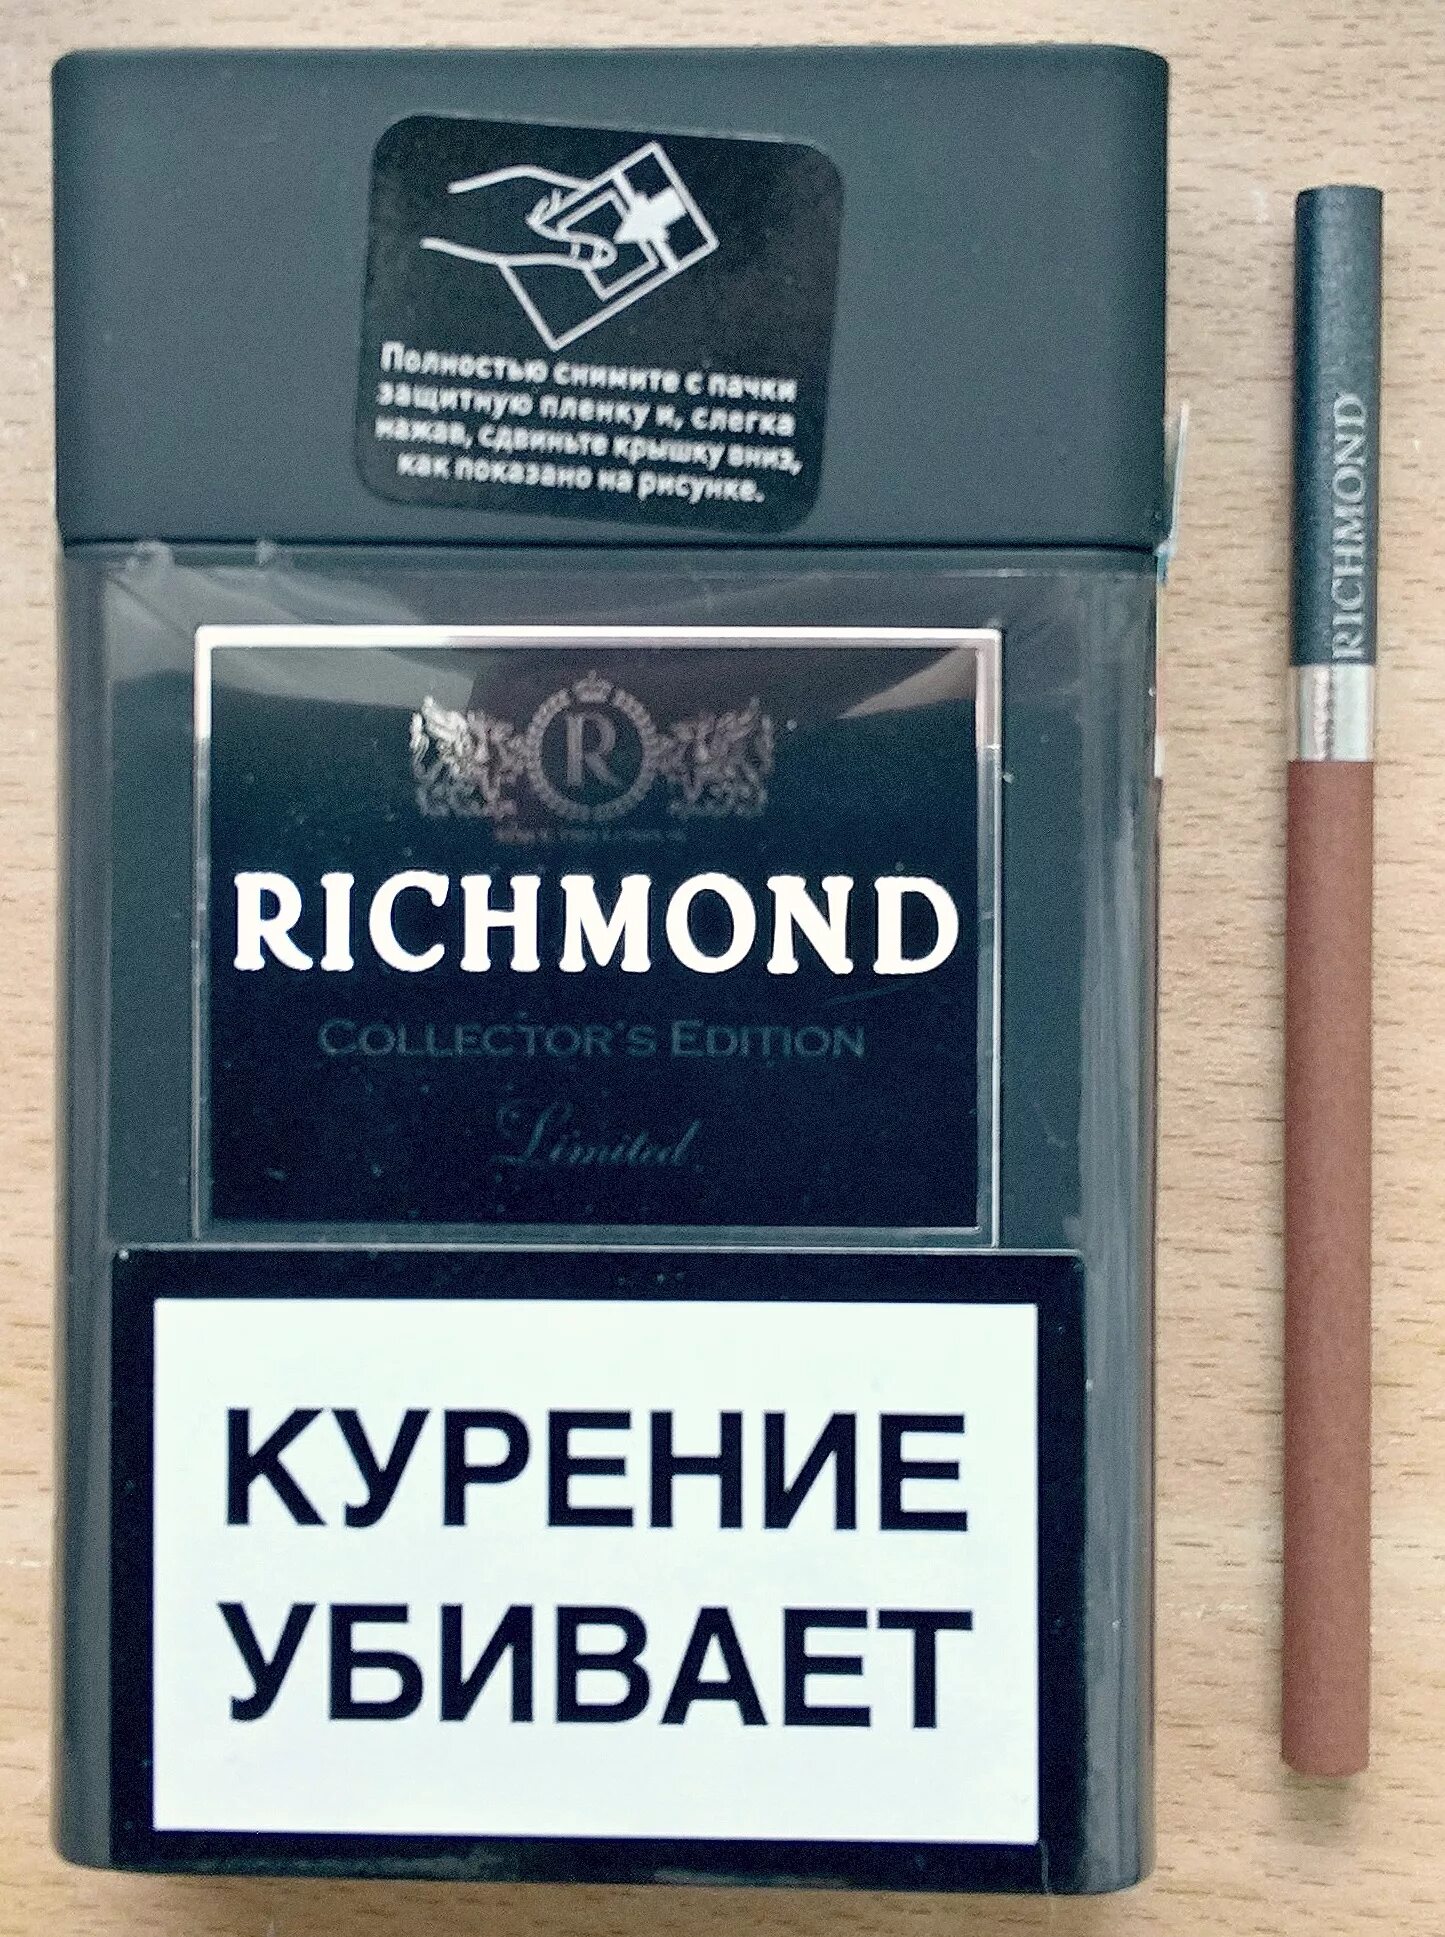 Ричмонд шоколадные. Ричмонд сигареты шоколадные. Сигареты Ричмонд Блэк эдитион. Sobranie Richmond сигареты. Сигареты Richmond Compact.